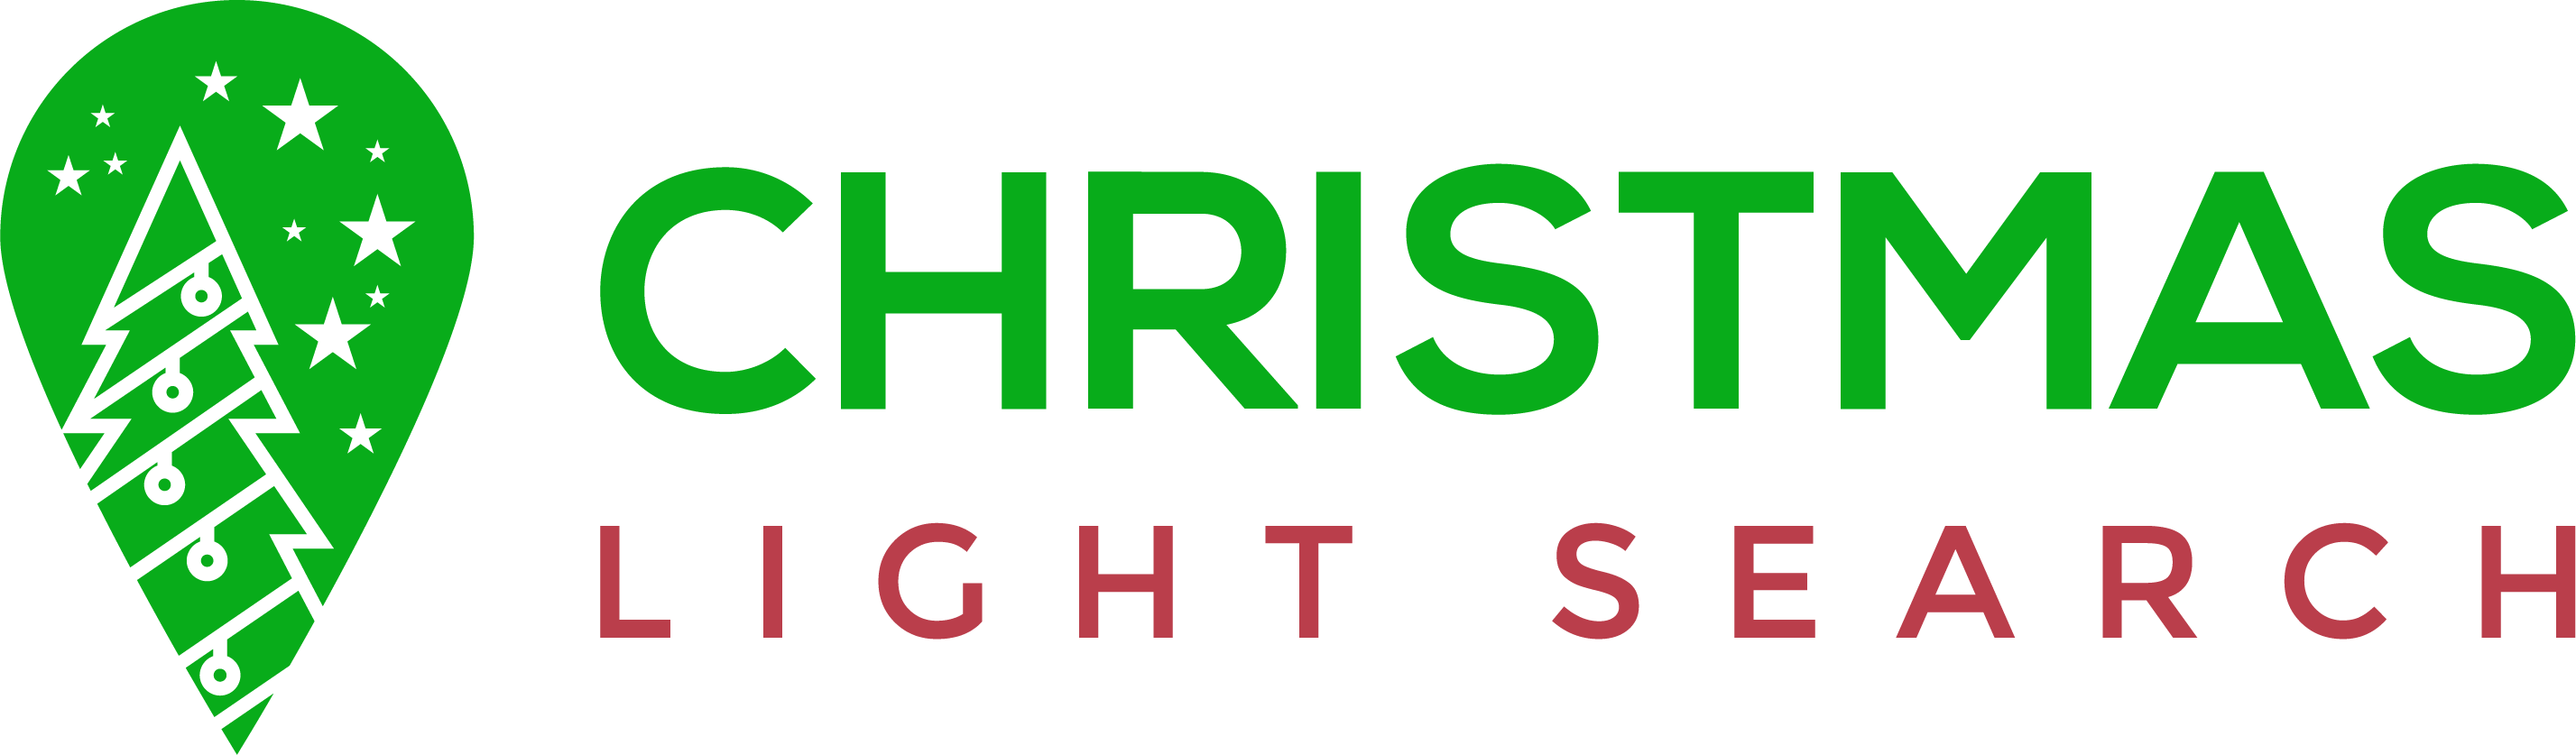 Christmas Light Search